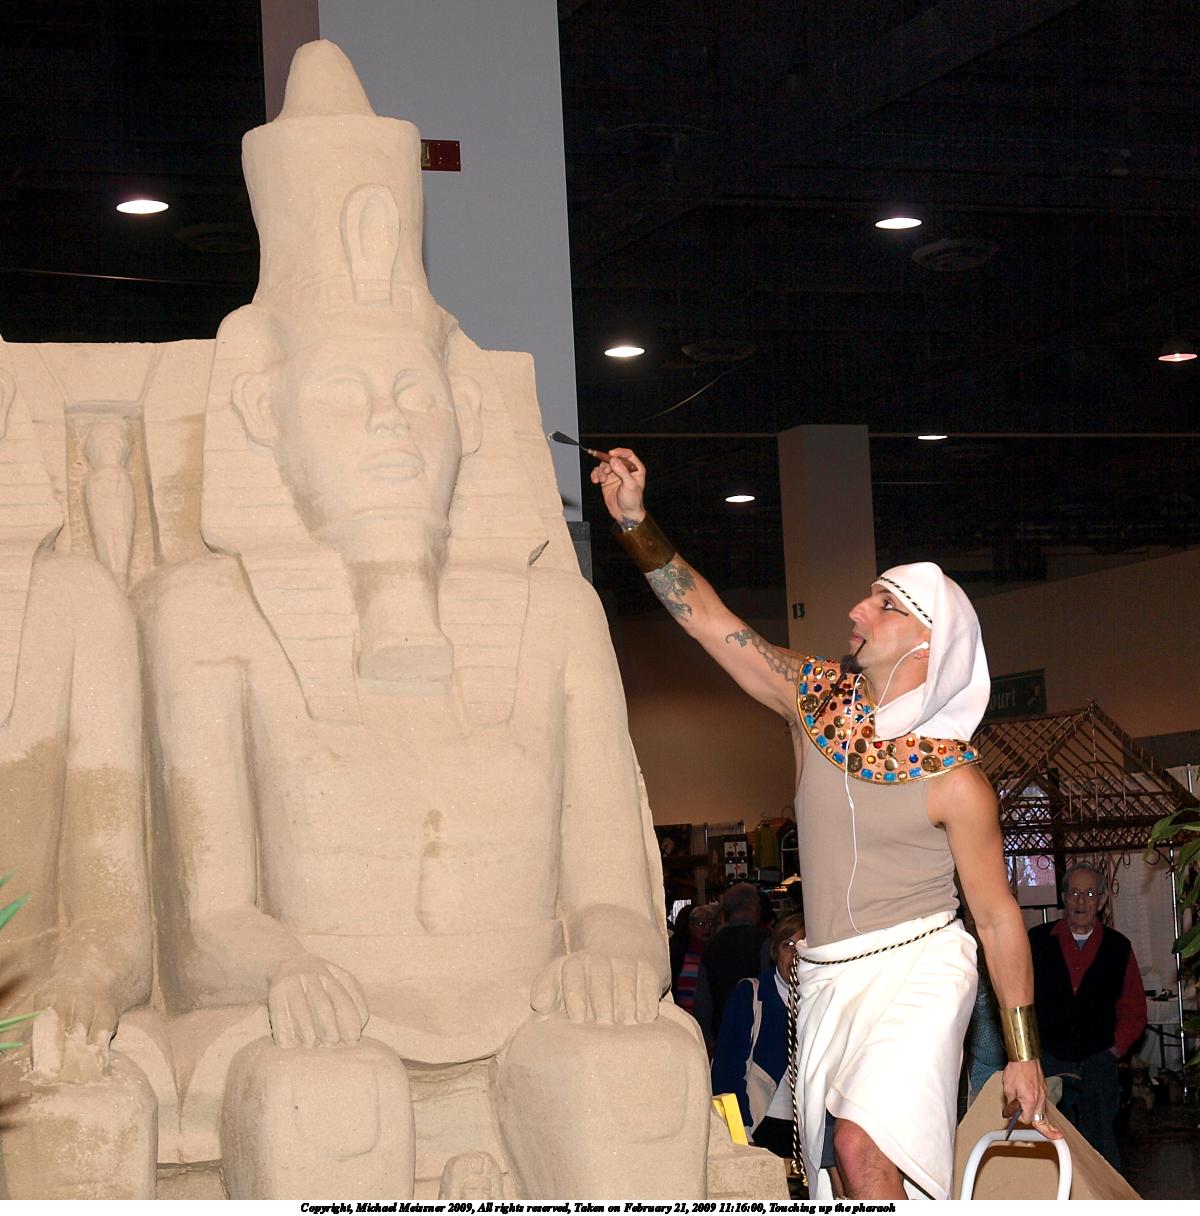 Touching up the pharaoh